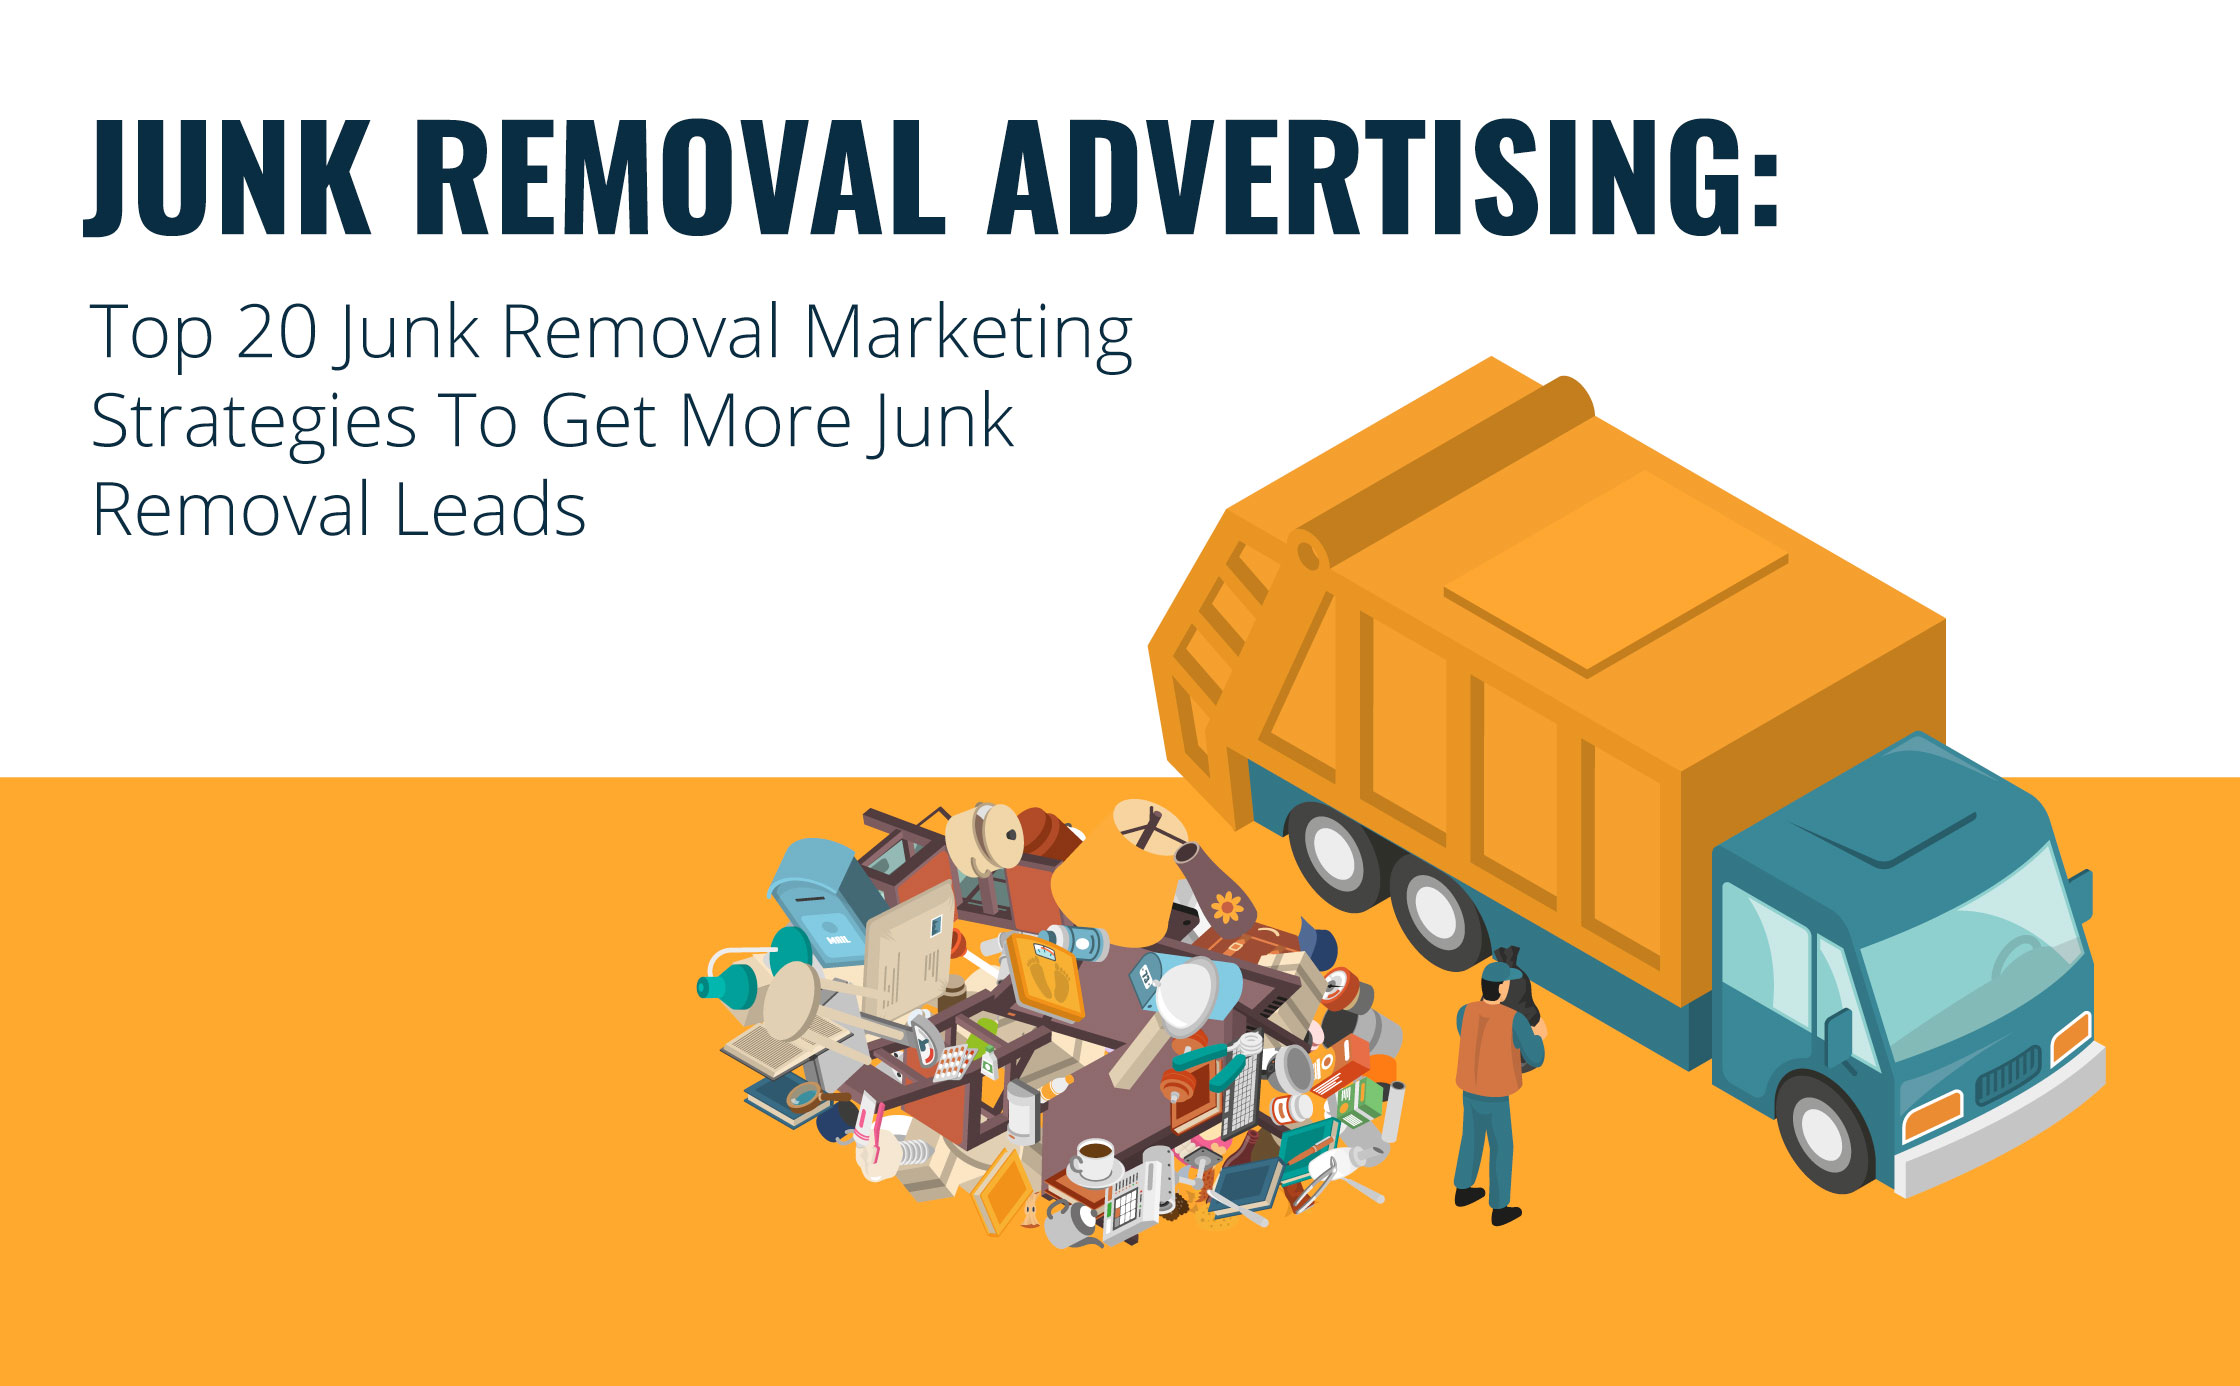 Top 20 Junk Removal Marketing Strategies